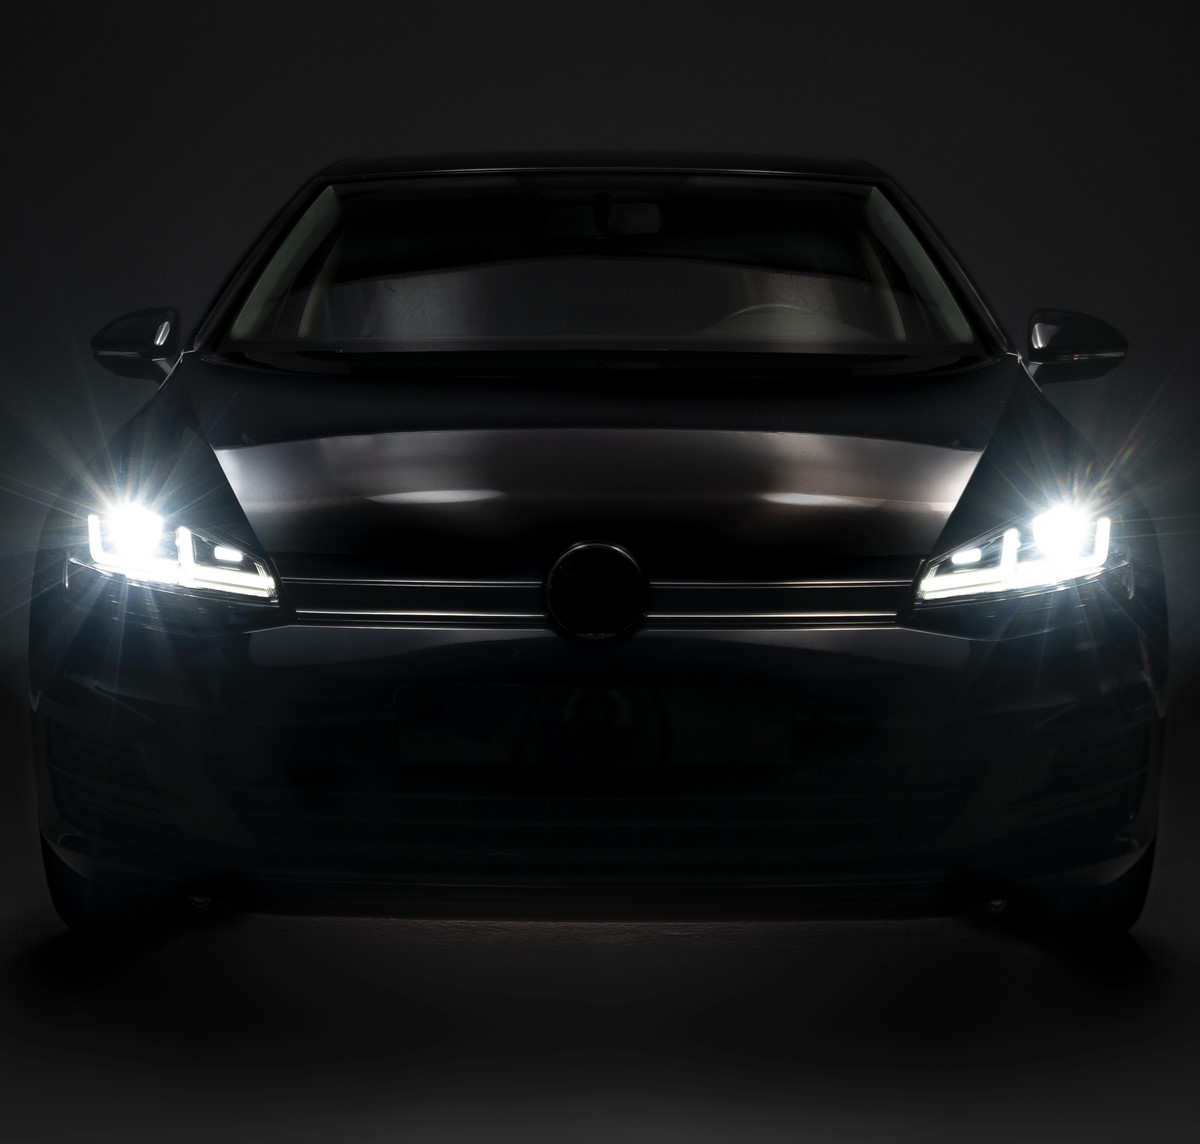 Osram LEDriving Scheinwerfer - VW Golf 7 GTI Edition (Xenon)